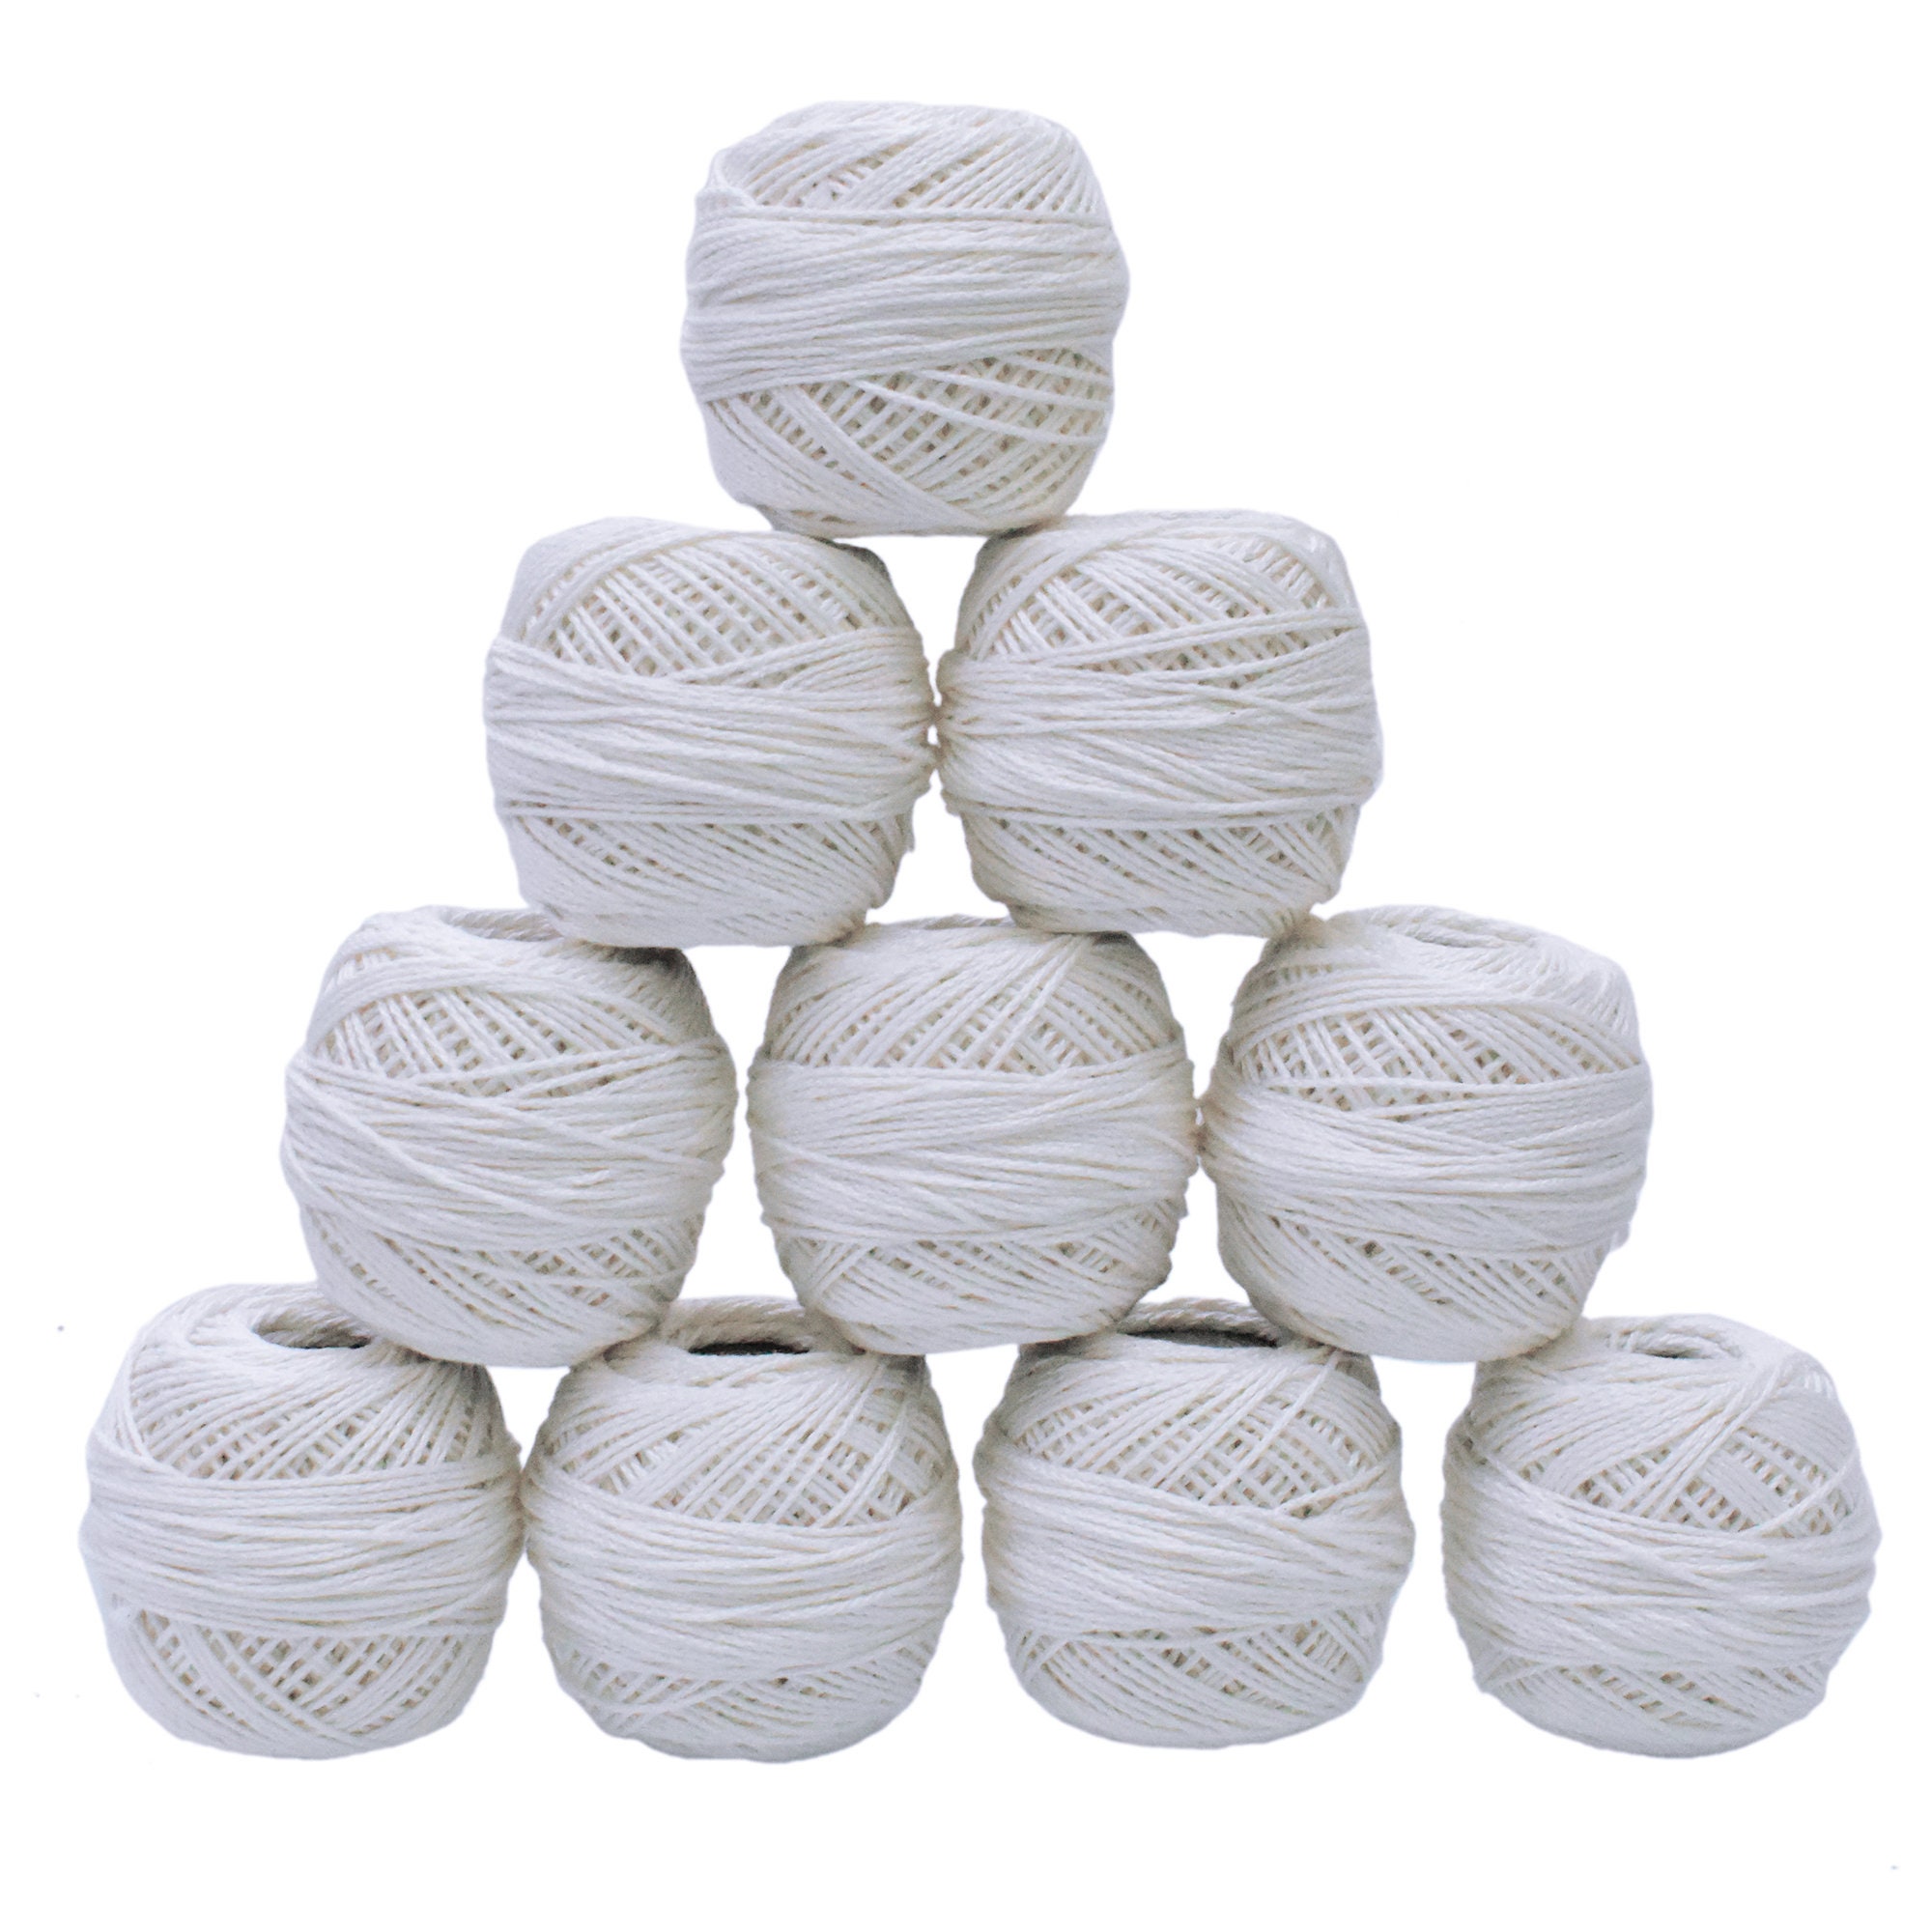 Crochet Cotton Thick Thread Floss Thread Size 12 for Crochet